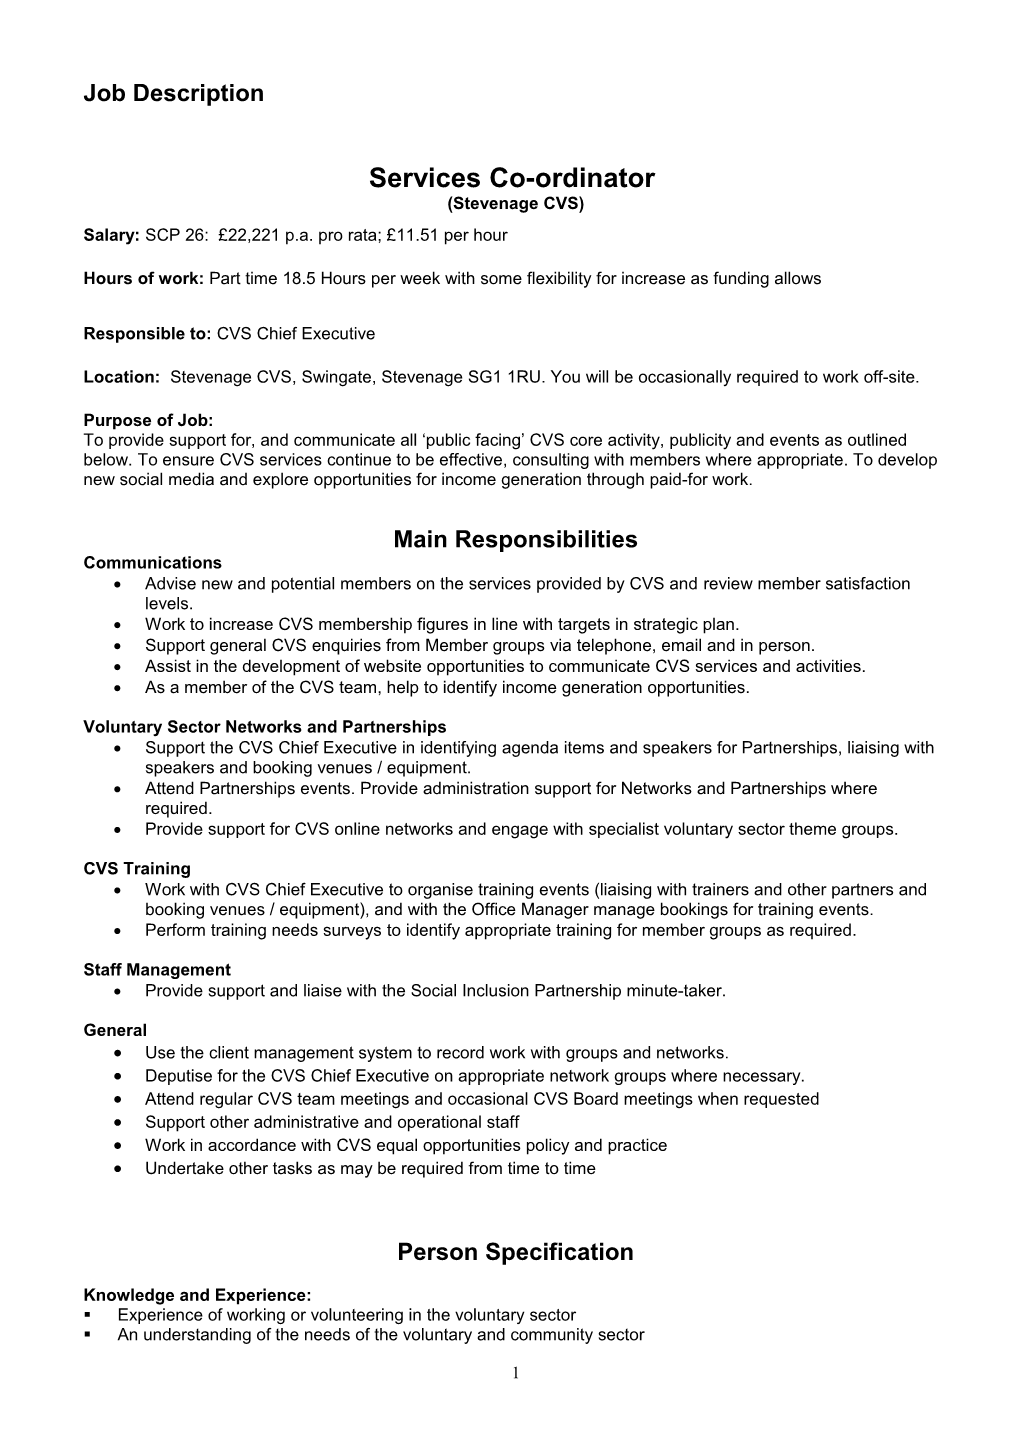 External Relations Manager (Draft 14/2/07)